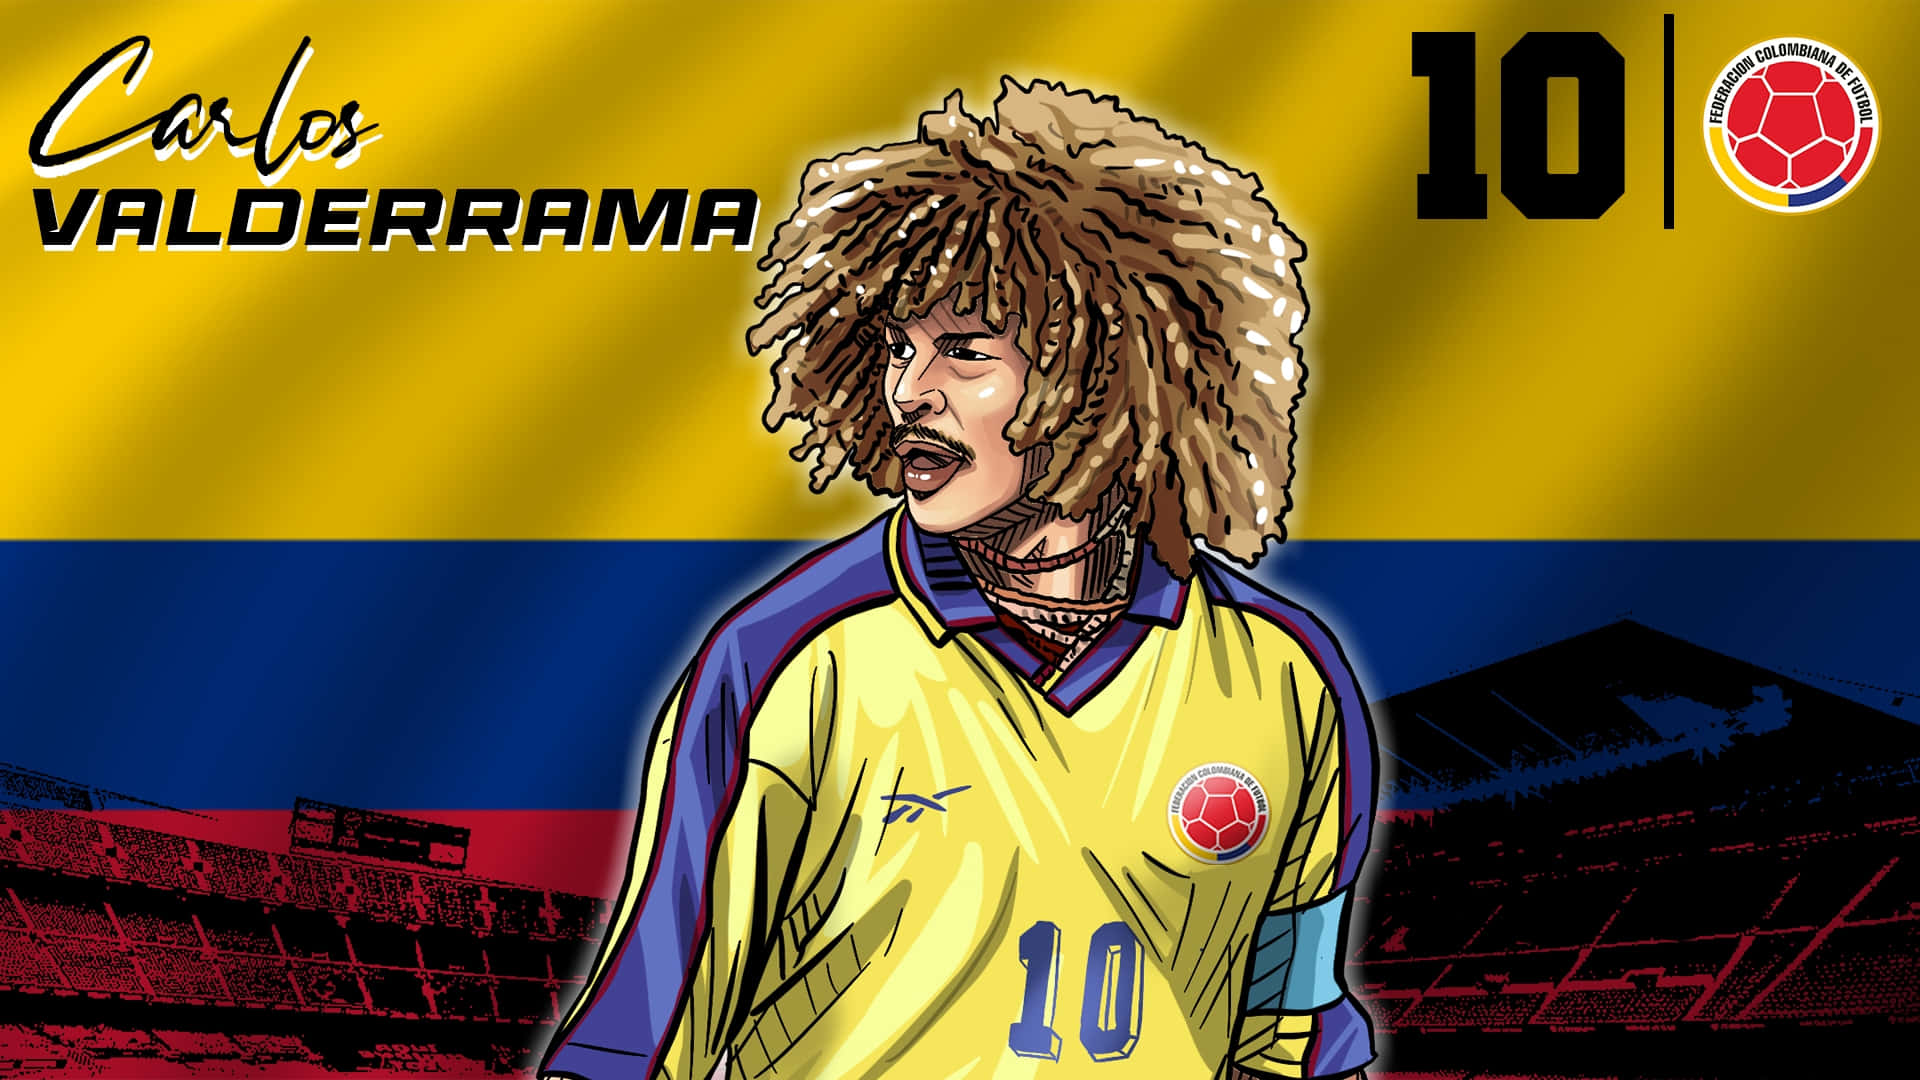 Carlos Valderrama's famous Colombia shirt